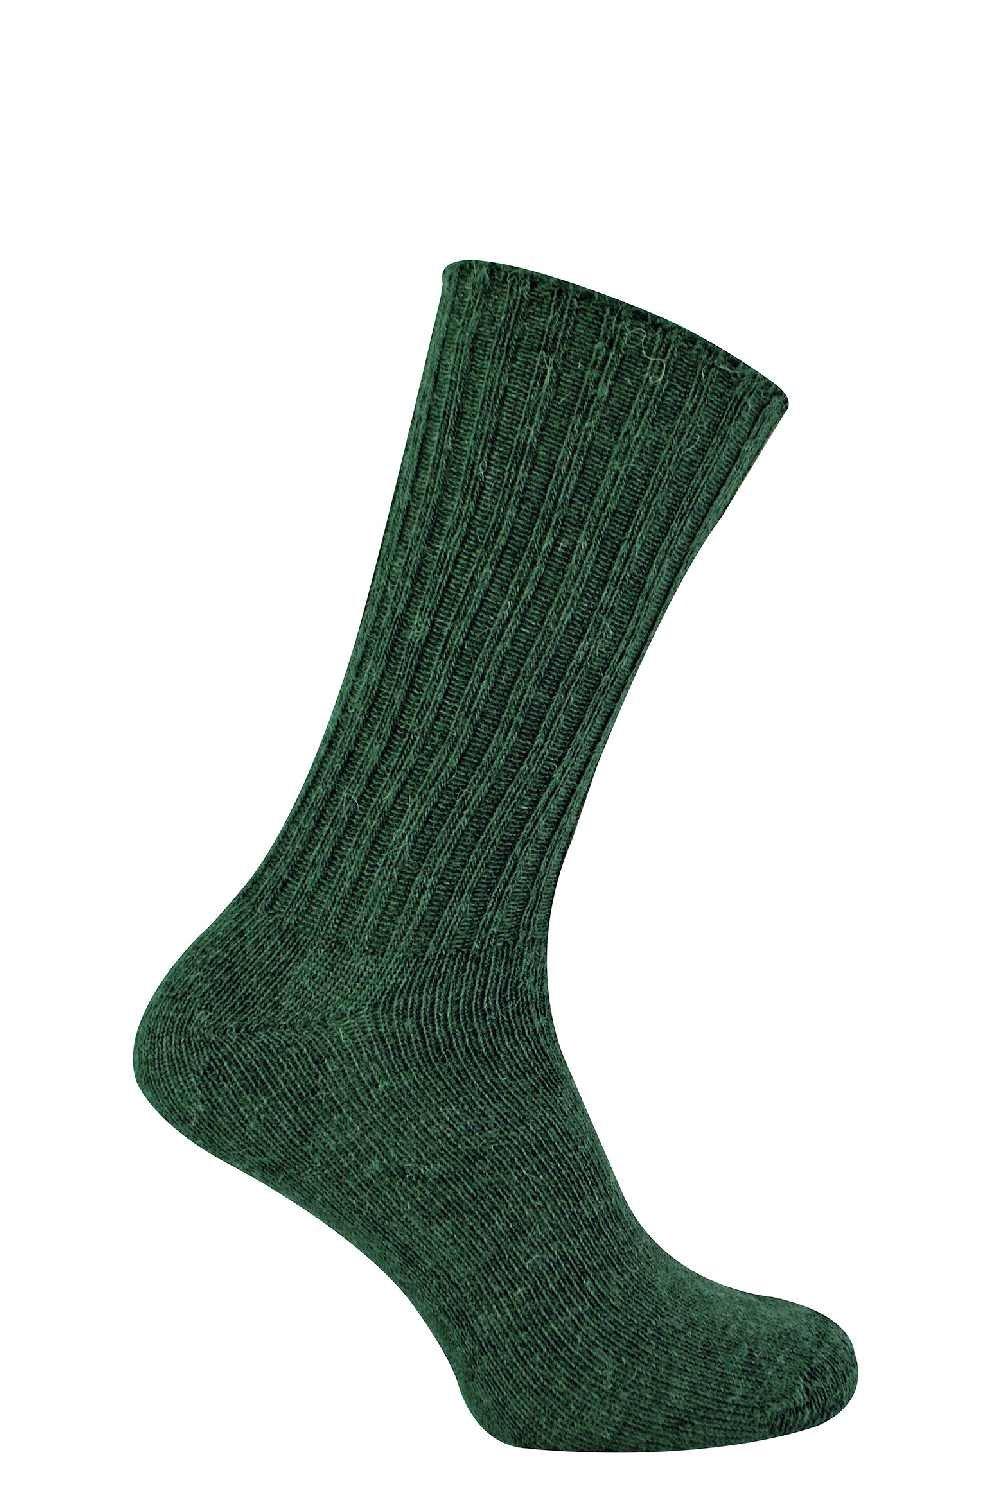 Warm Soft Luxury Mohair Angora Wool Socks for Winter